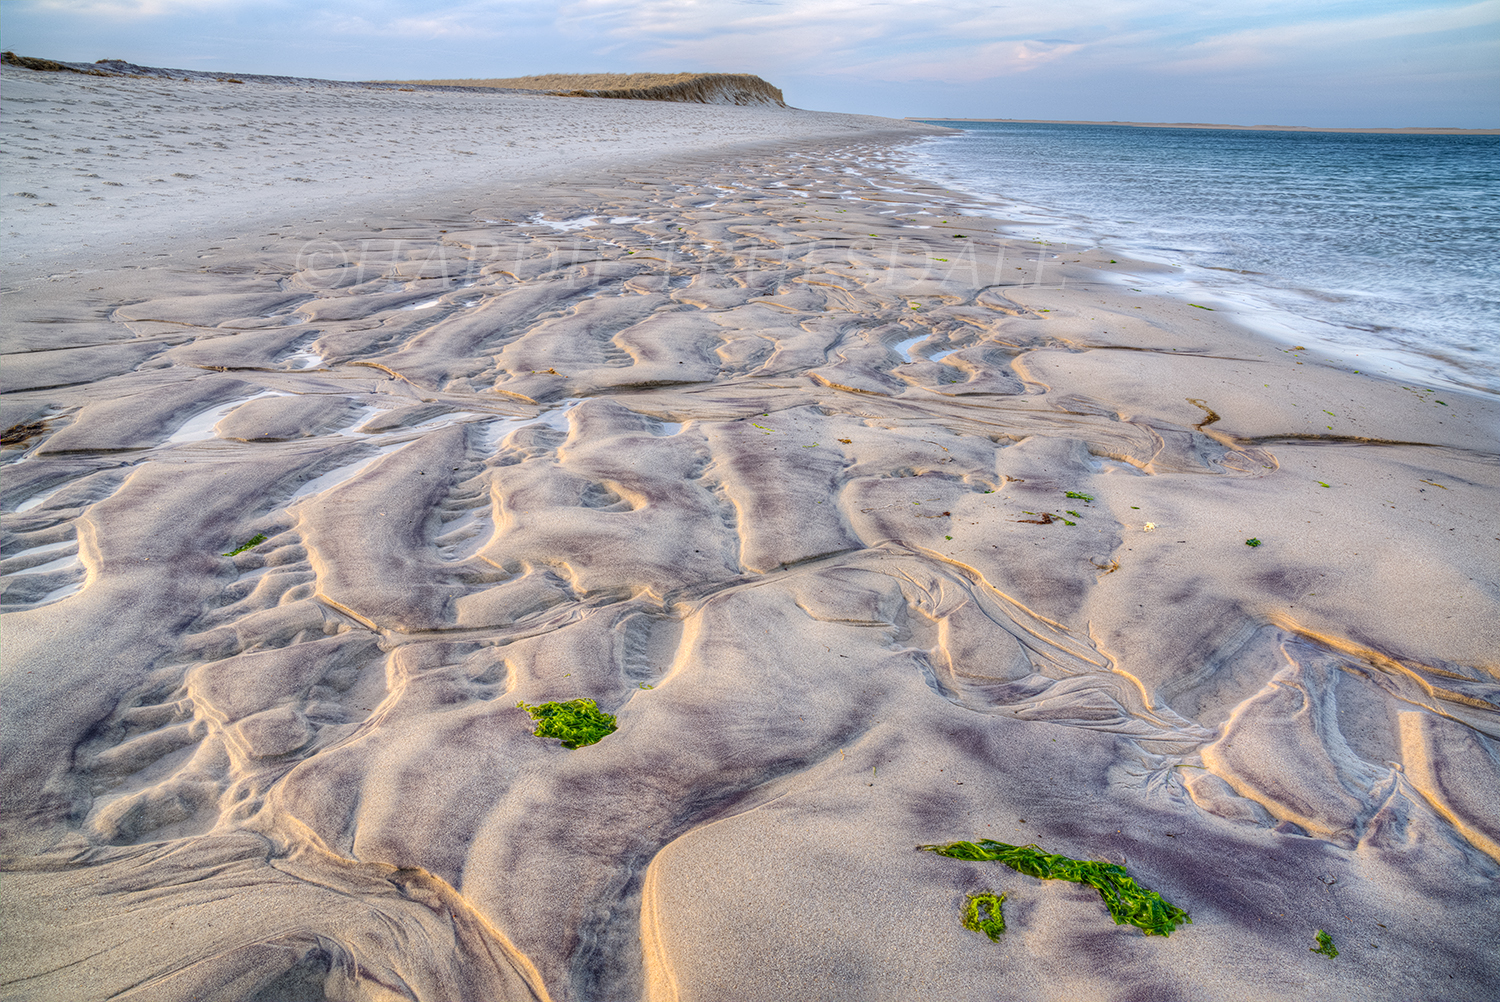 CC#201 "Sand, Clay, & Seaweed, South Beach"